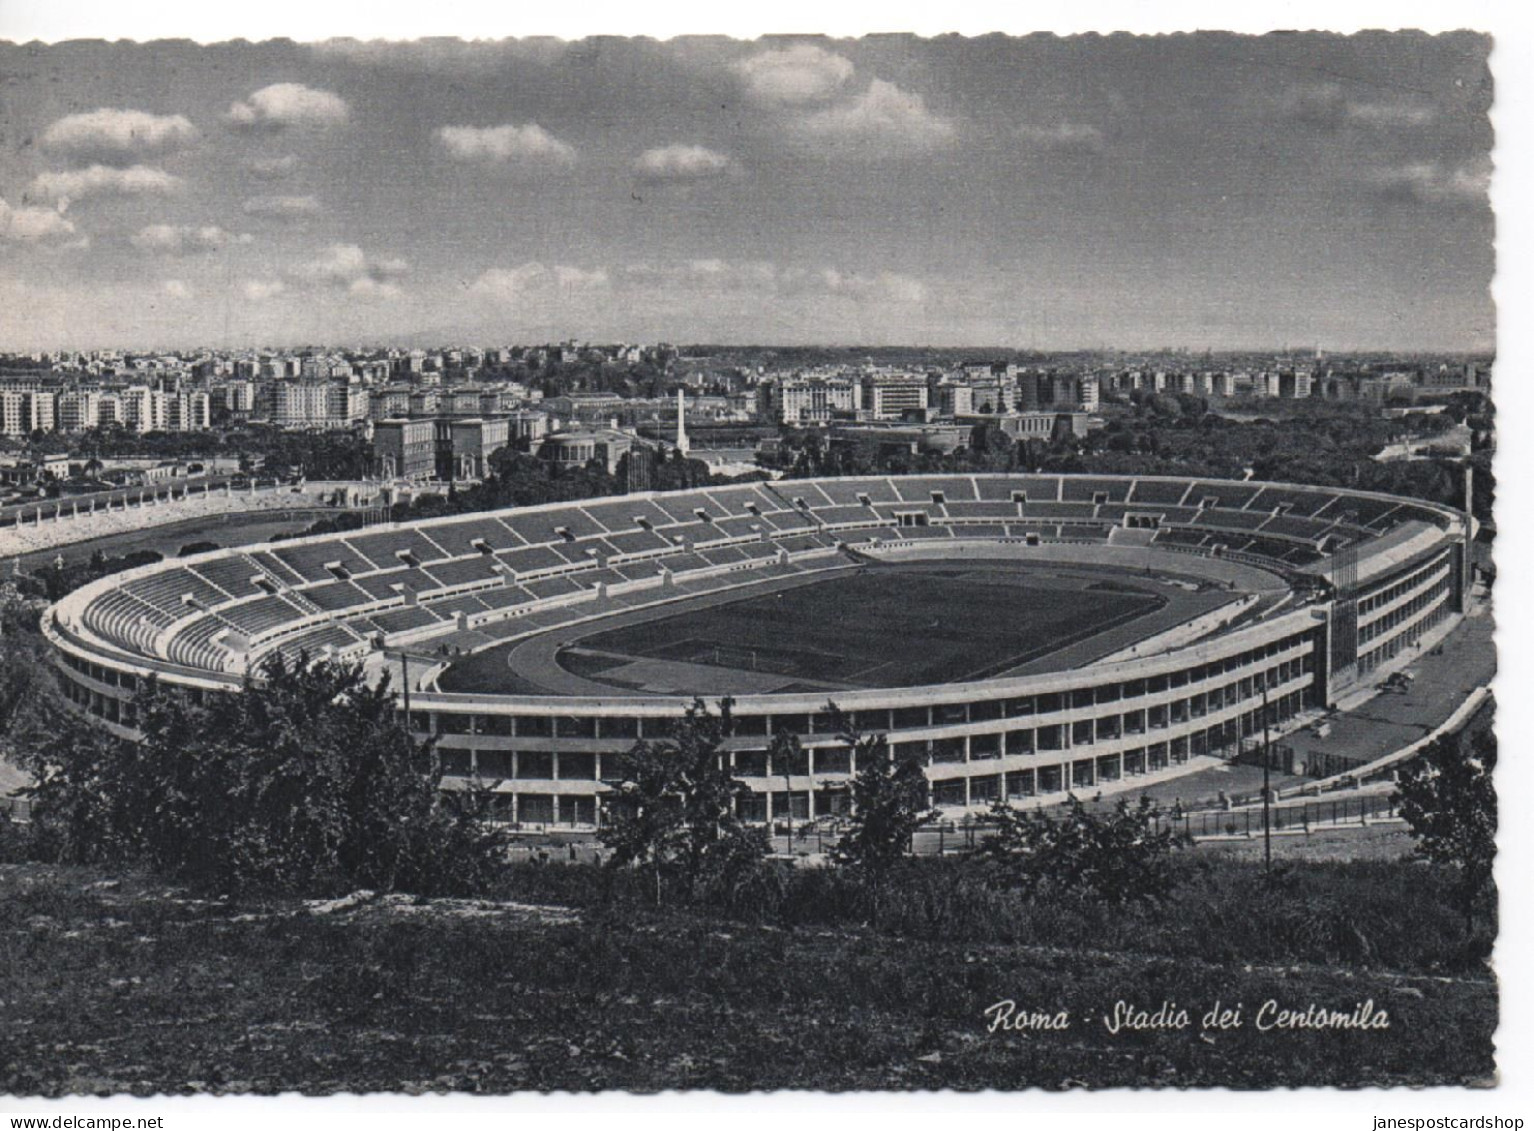 THE STADIUM OF HUNDRED THOUSAND SPECTATORS - LARGER SIZED POSTCARD - UNPOSTED - IN GOOD CONDITION - 1950's ? - Estadios E Instalaciones Deportivas